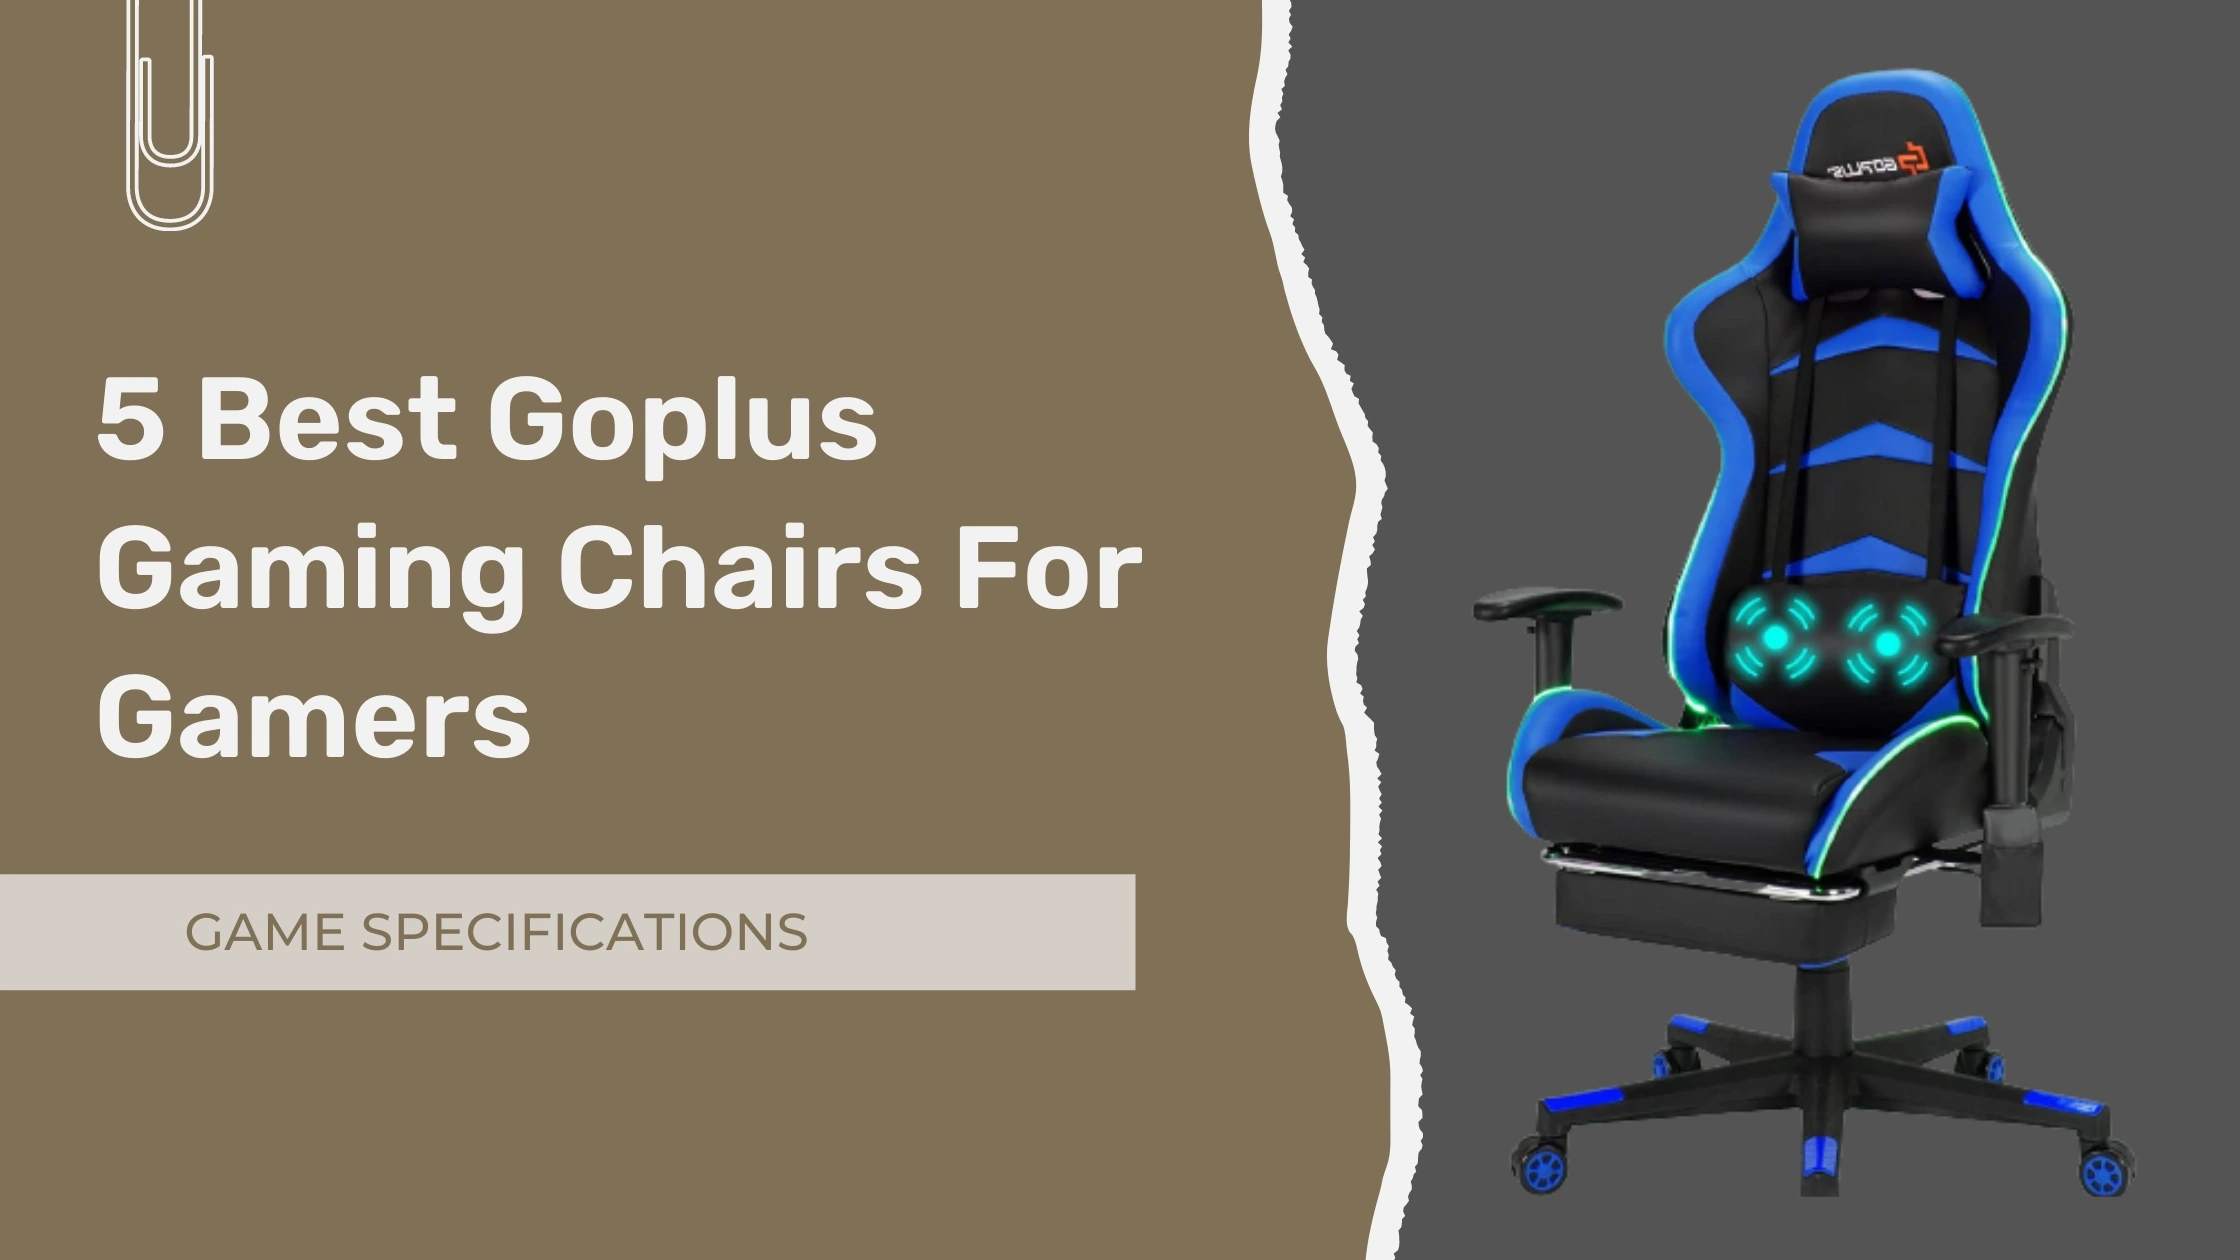 Goplus Gaming Chairs